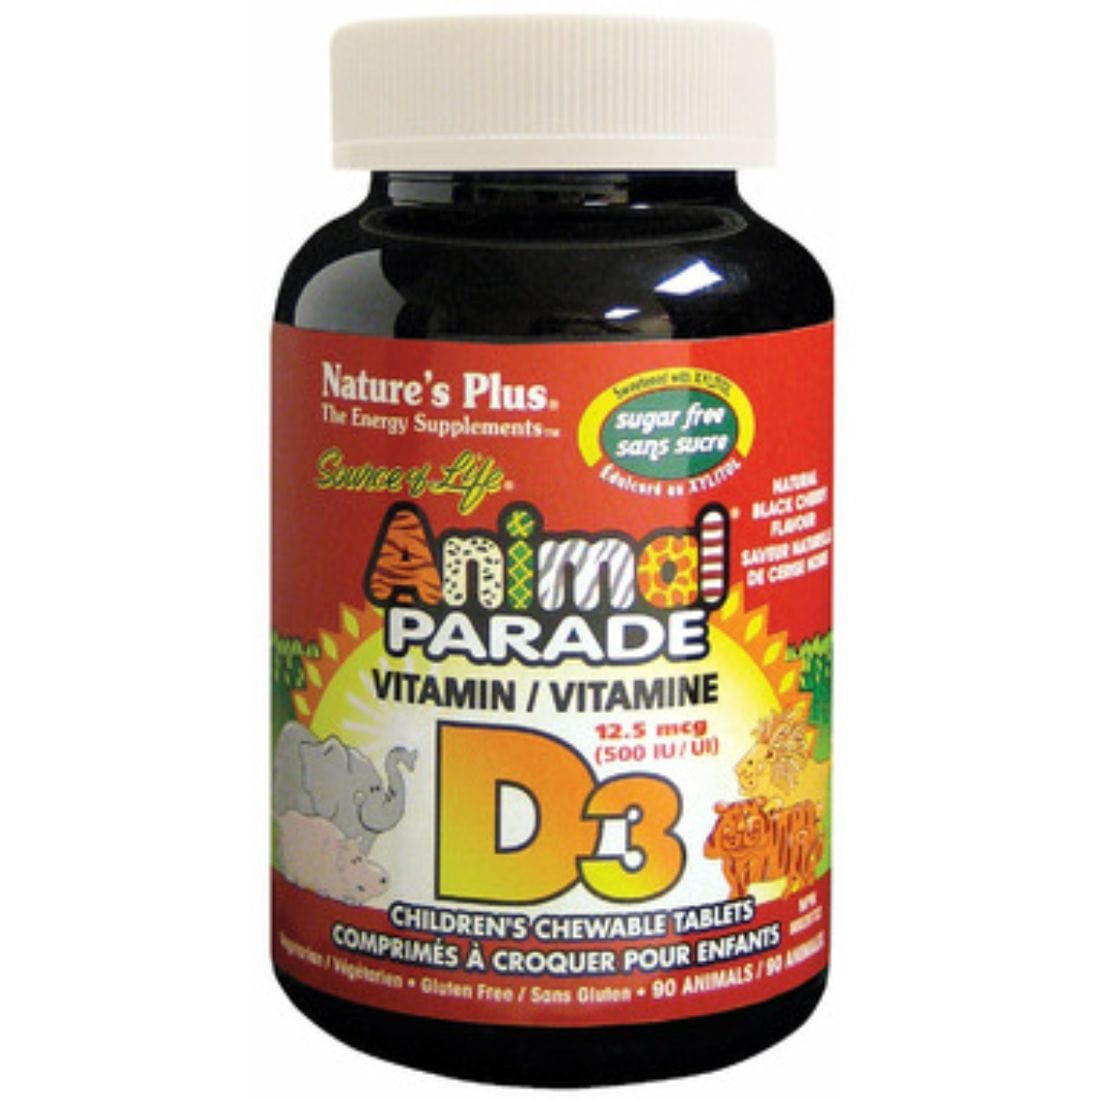 Nature's Plus Animal Parade Vitamin D3 500IU Chews, Sugar Free, 90 Animal-Shaped Chewable Tablets